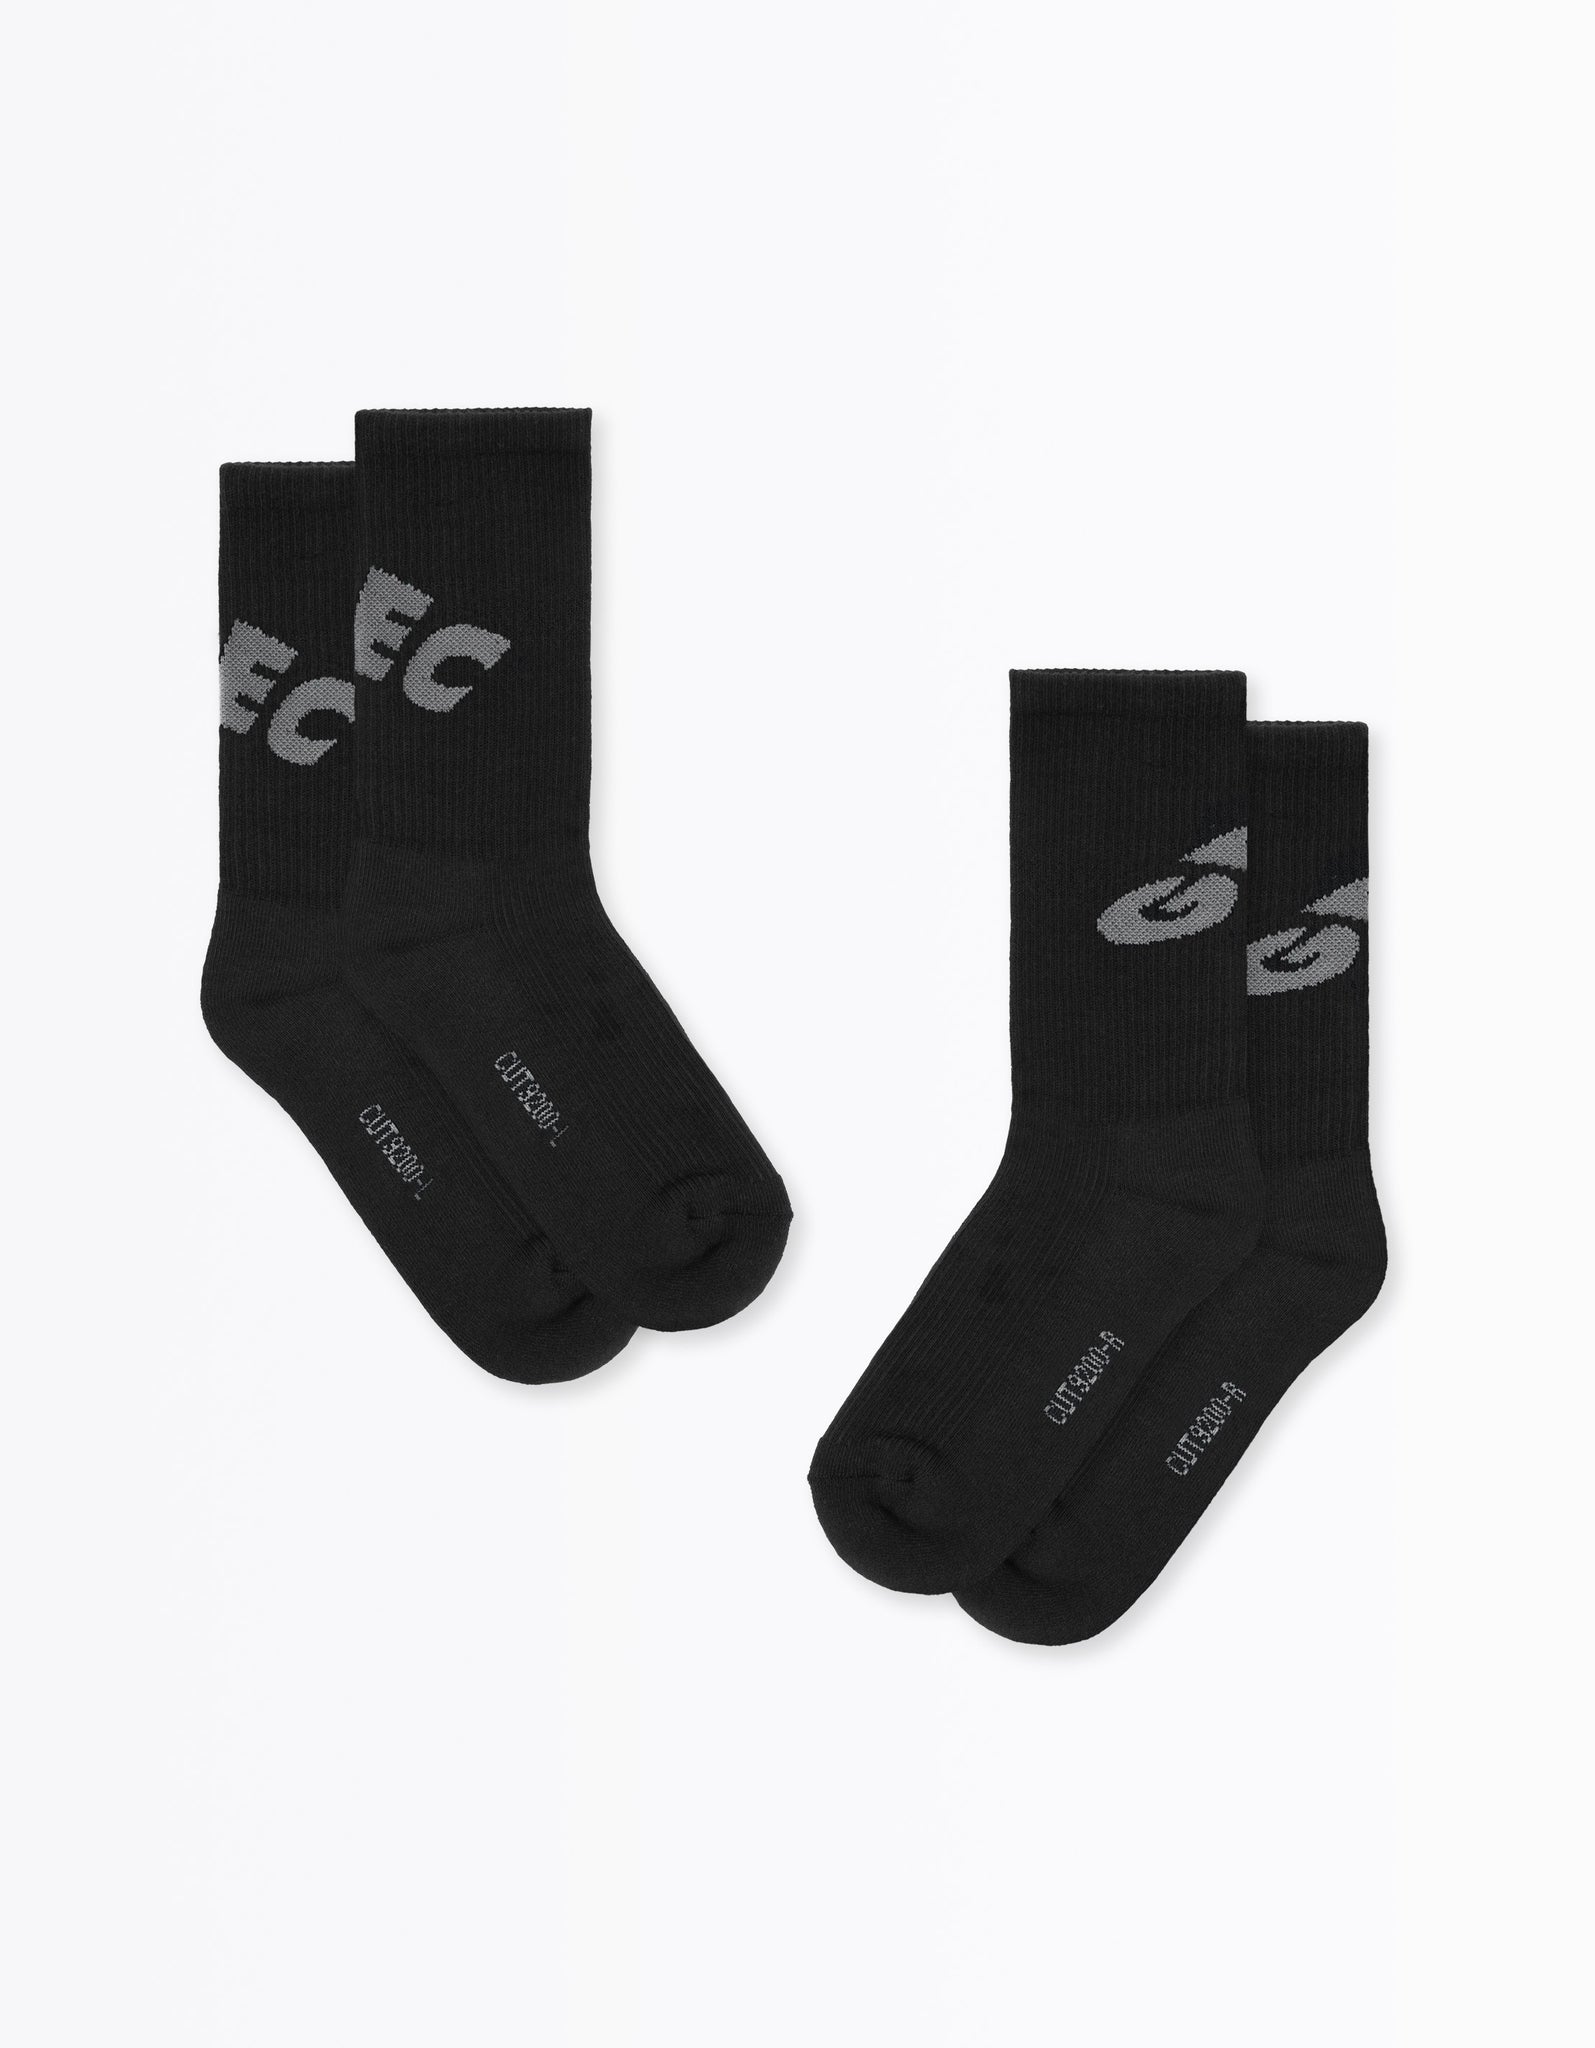 RG Long Sock Two Pack Black/Chalk Grey